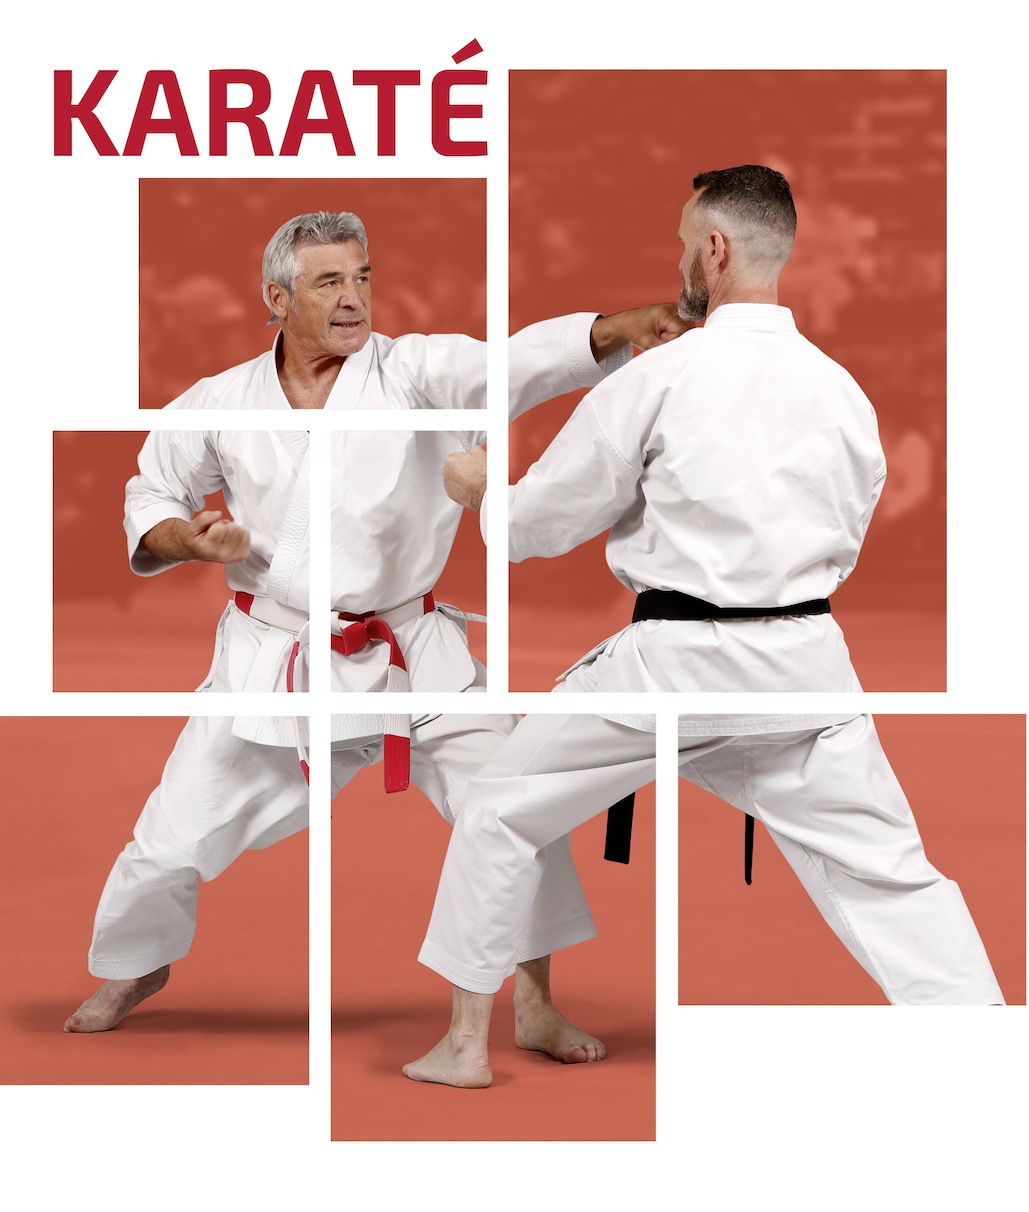 MAK : cours karate adultes paris